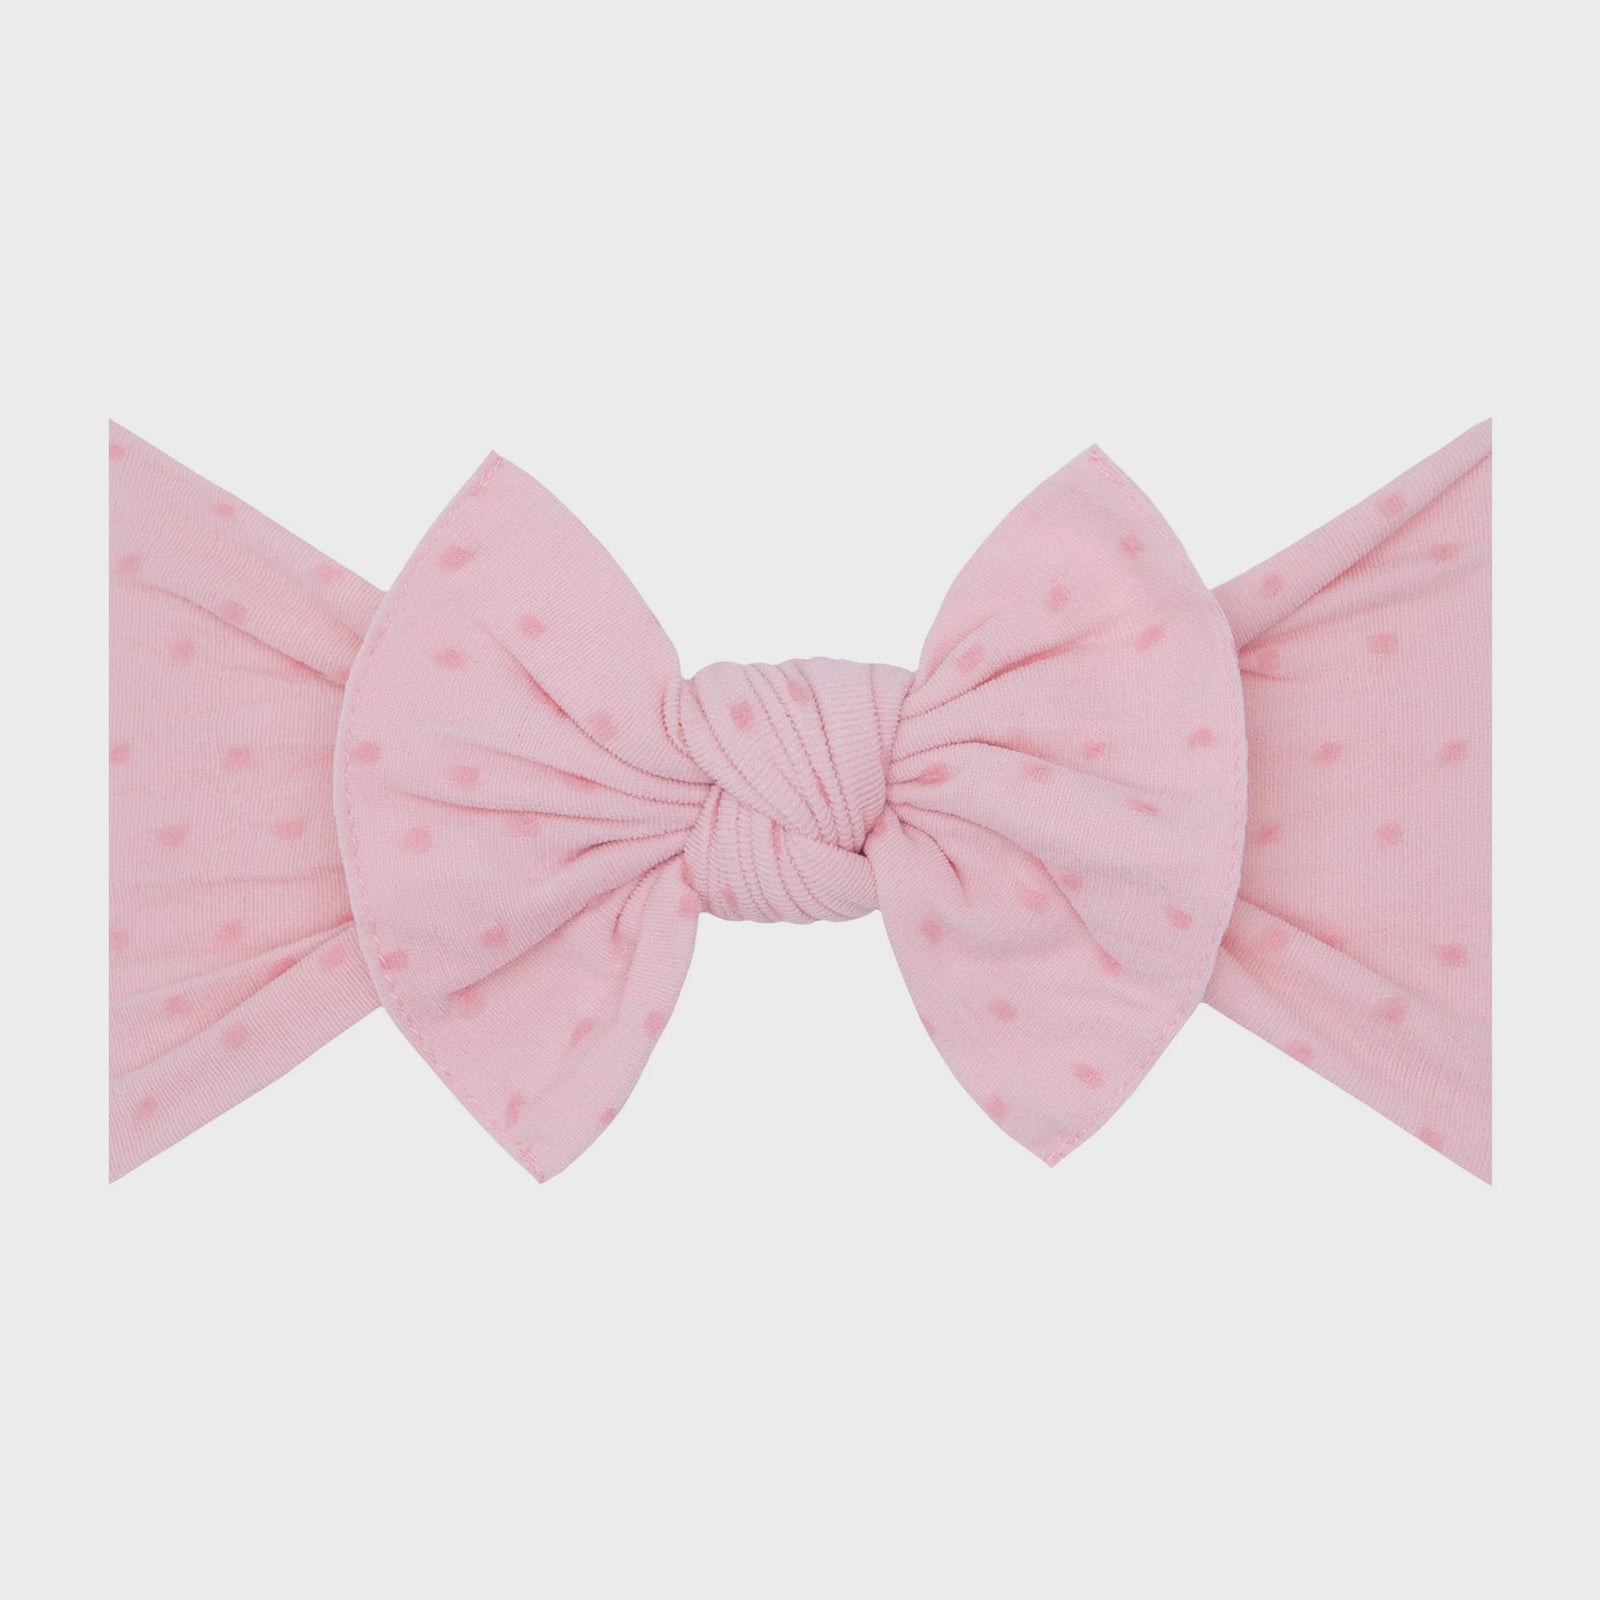 Patterned Shabby Knot Headband - Pink/Pink Dot